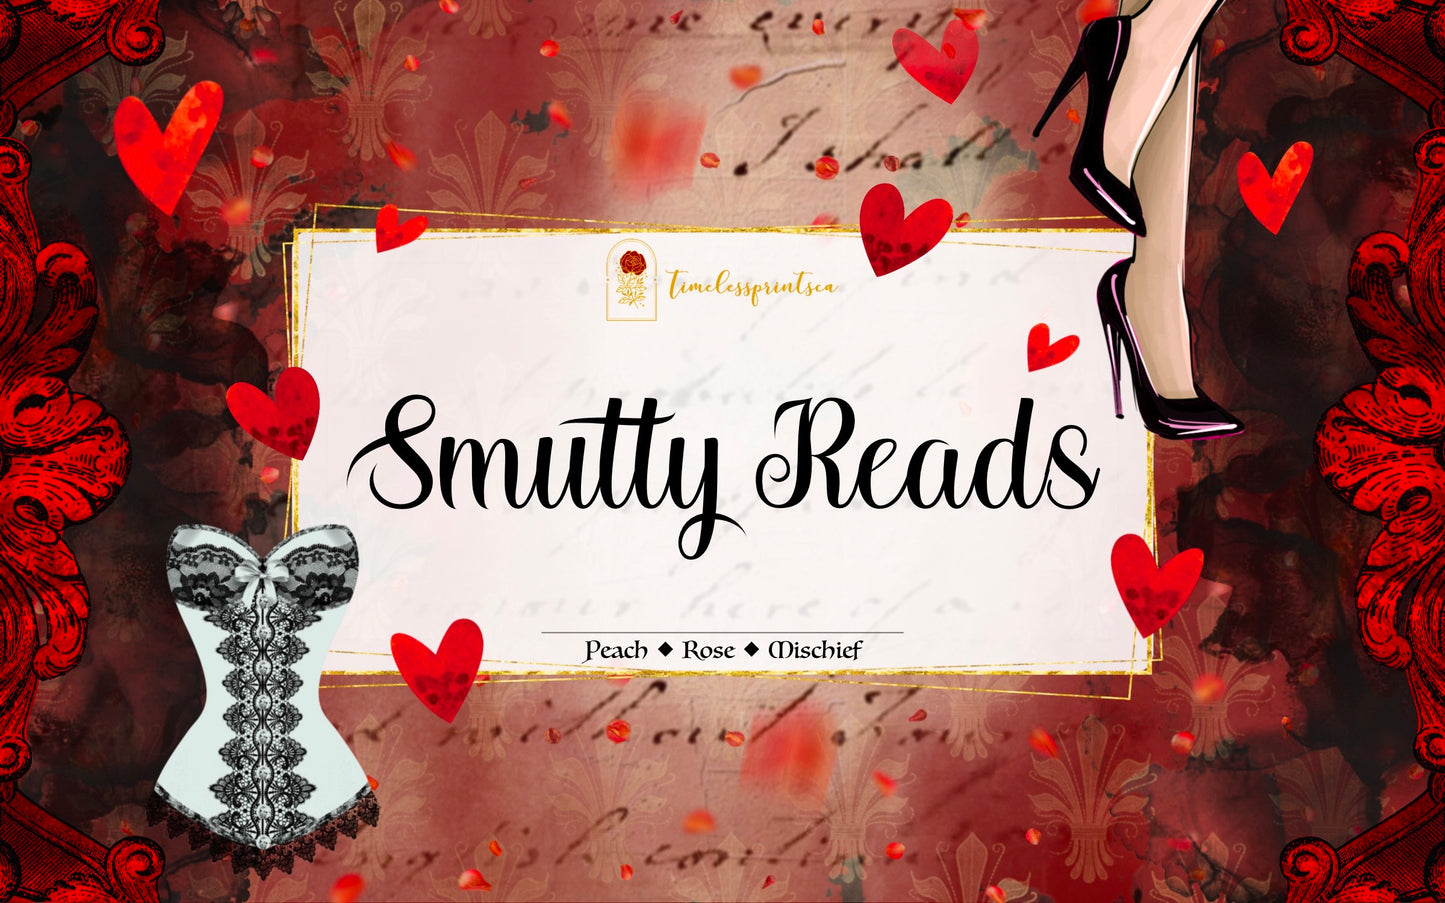 Smutty Reads